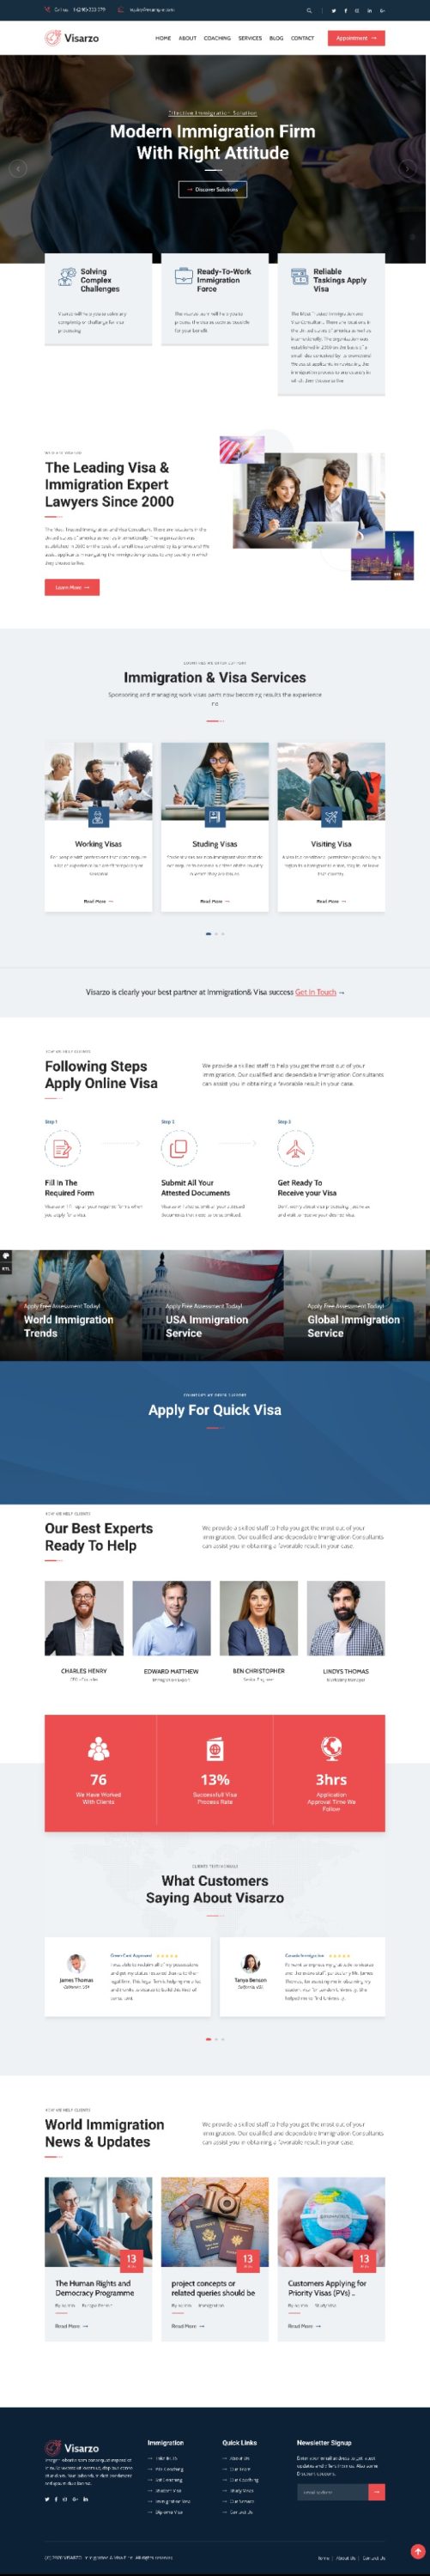 Mẫu Website Tư Vấn Du Học Visa Visarzo Home 2